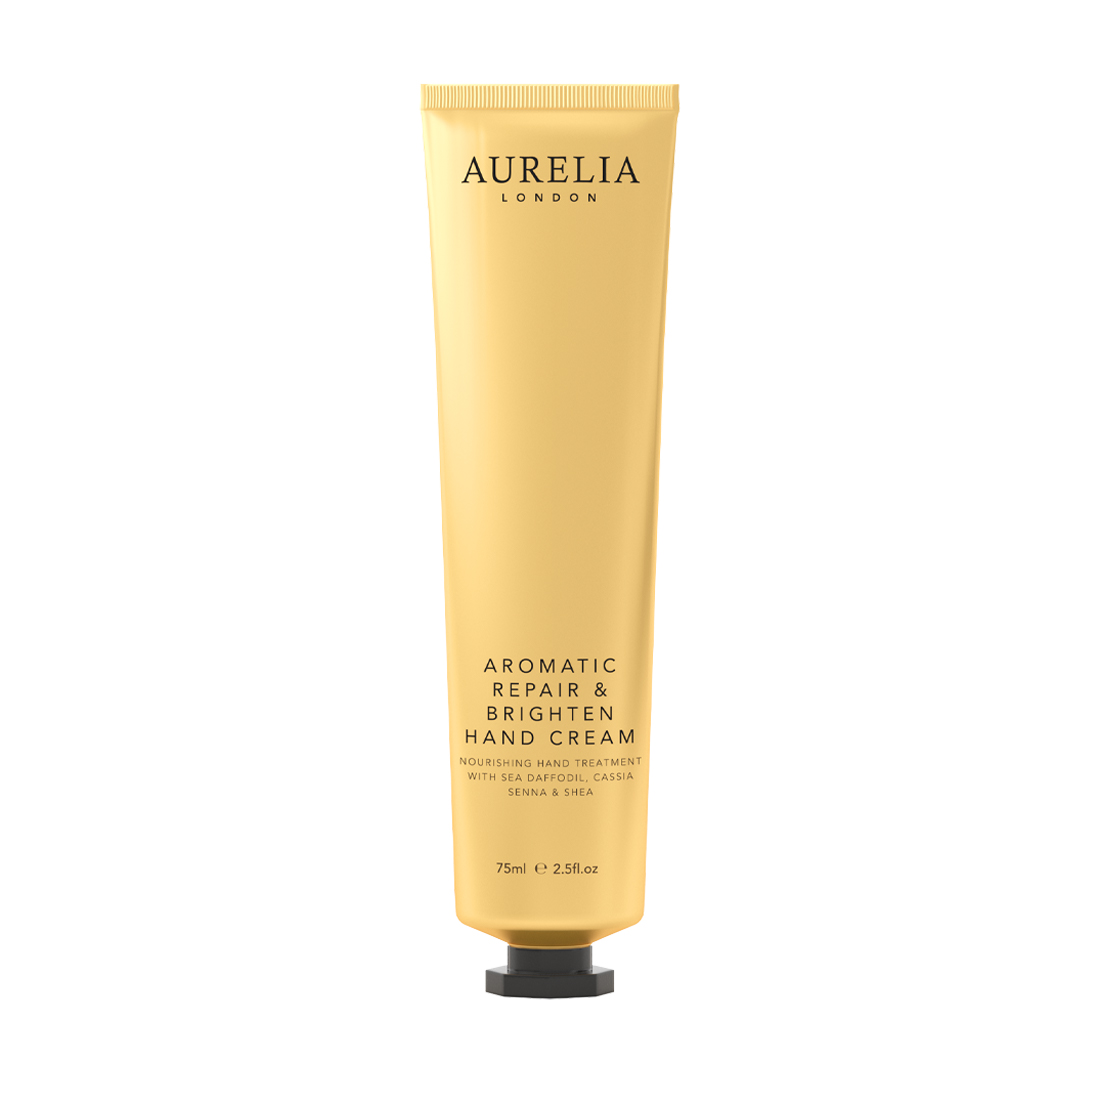 An image of Aurelia London, Aromatic Repair & Brighten Hand Cream, 75ml